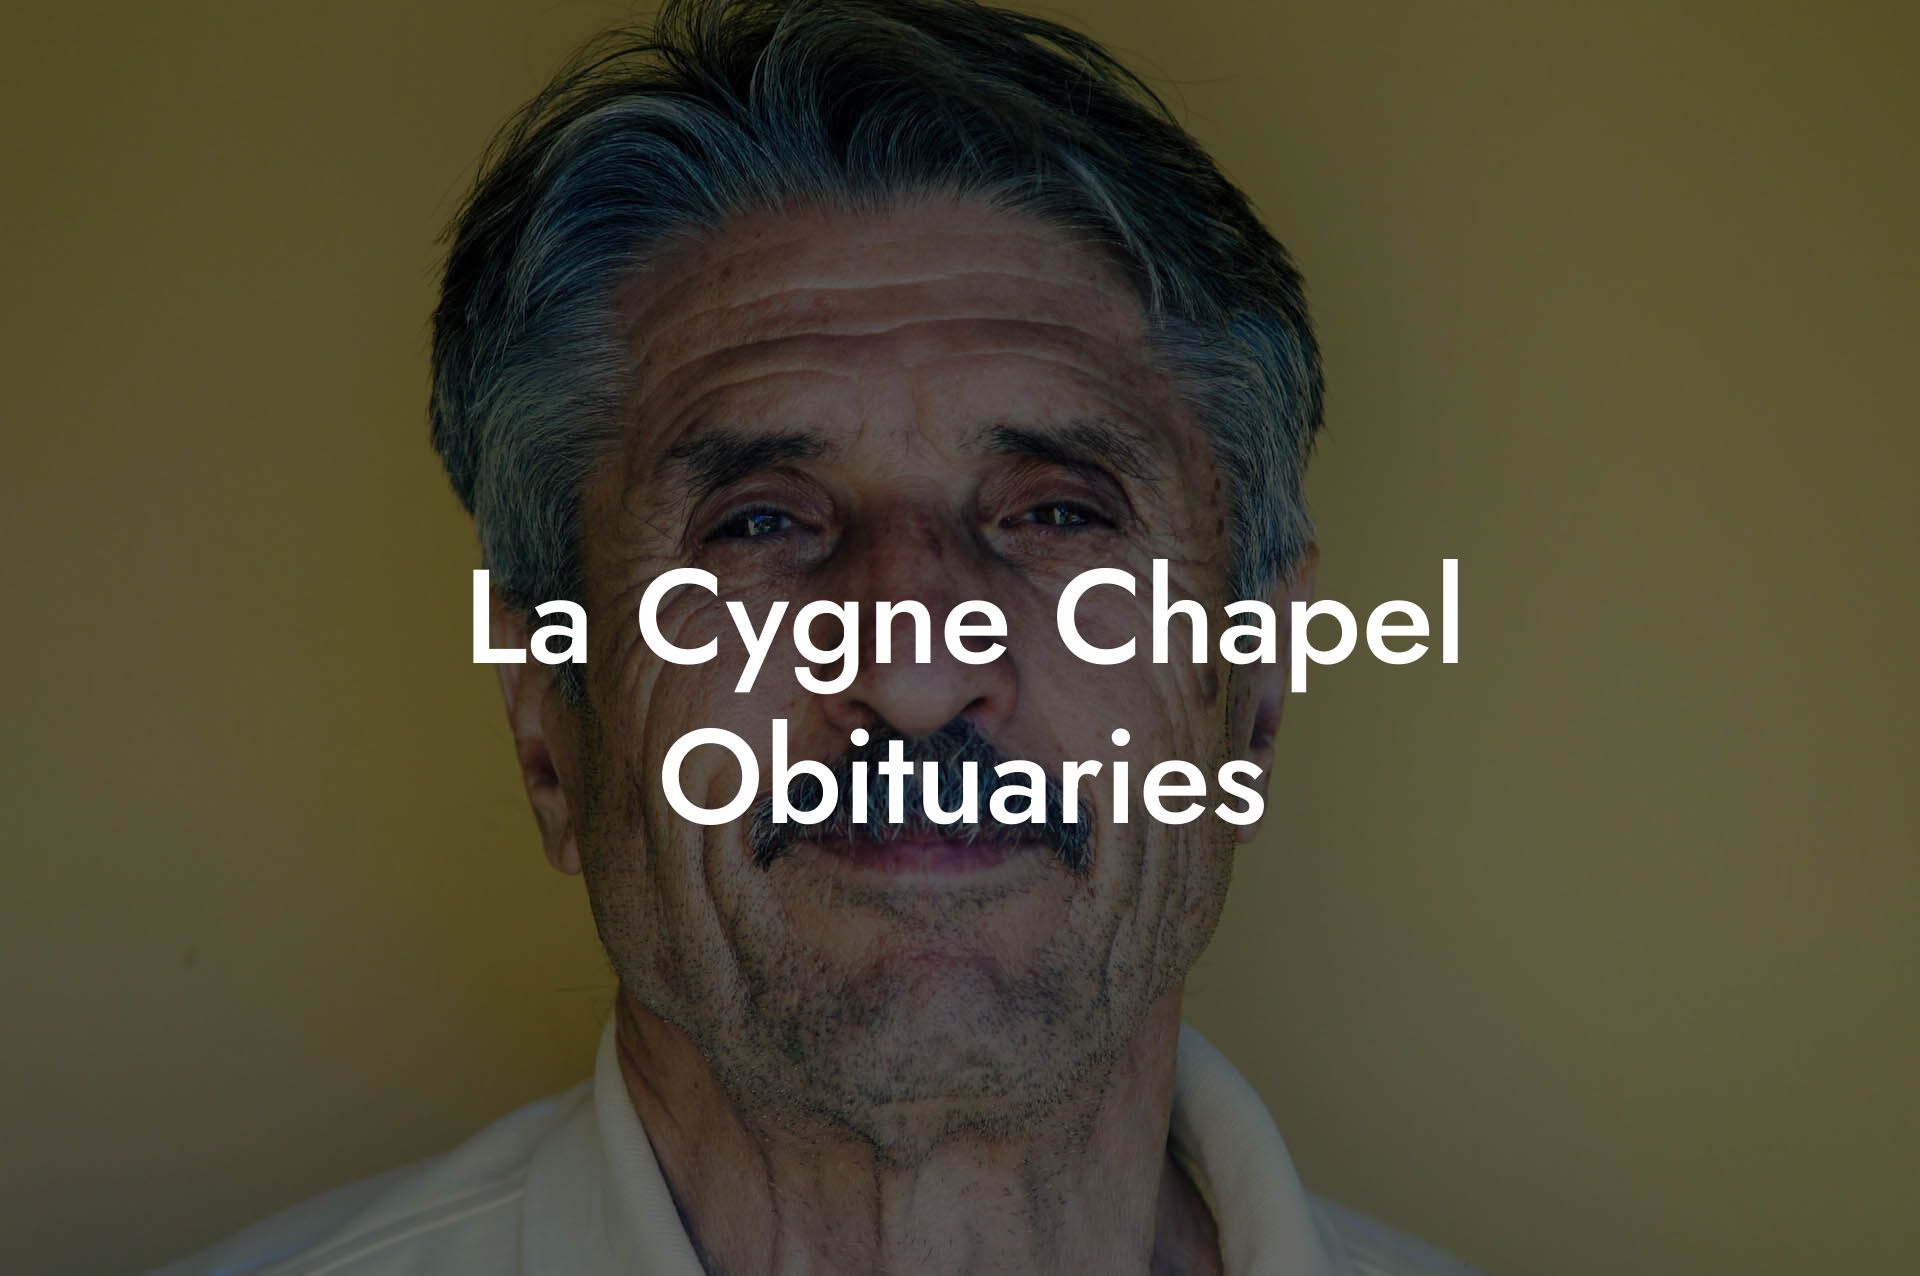 La Cygne Chapel Obituaries